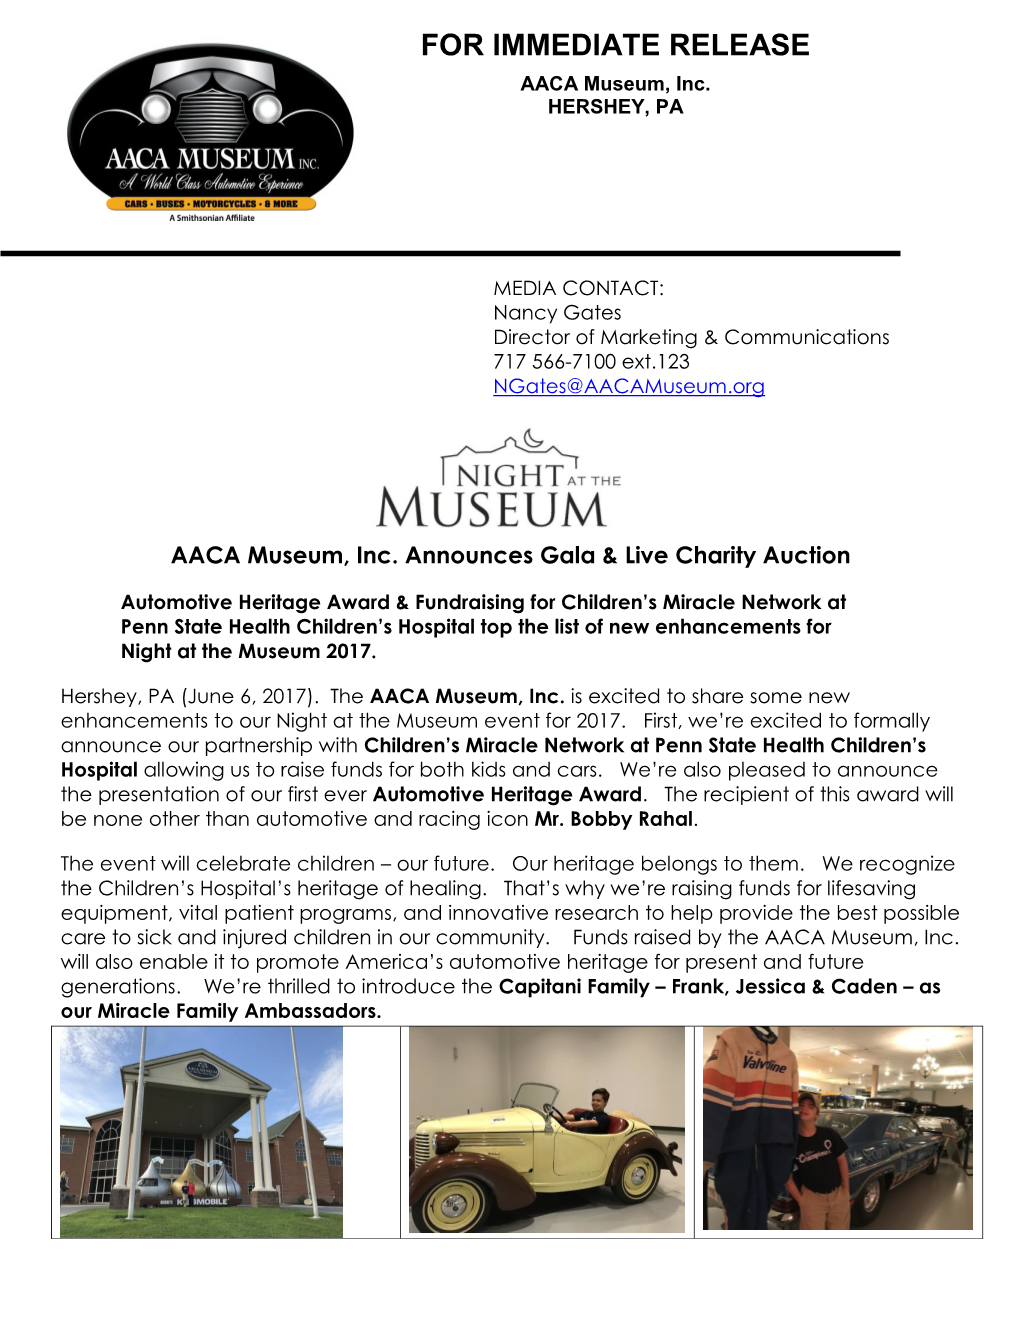 FOR IMMEDIATE RELEASE AACA Museum, Inc